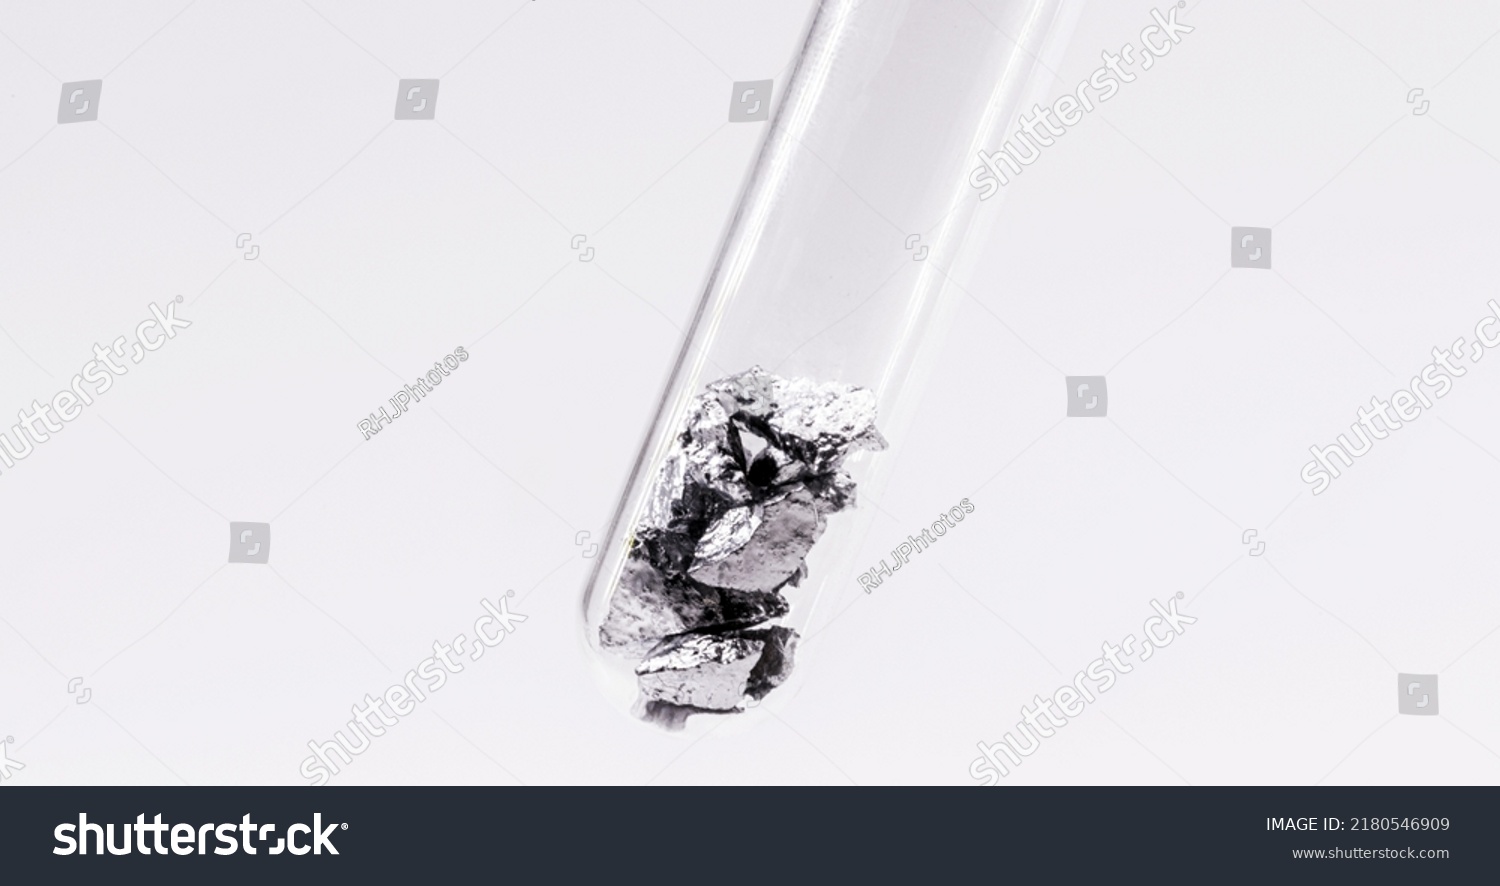 Chromium fragments inside test tube, industrial use ore, metallic chemical element, isolated on white background #2180546909